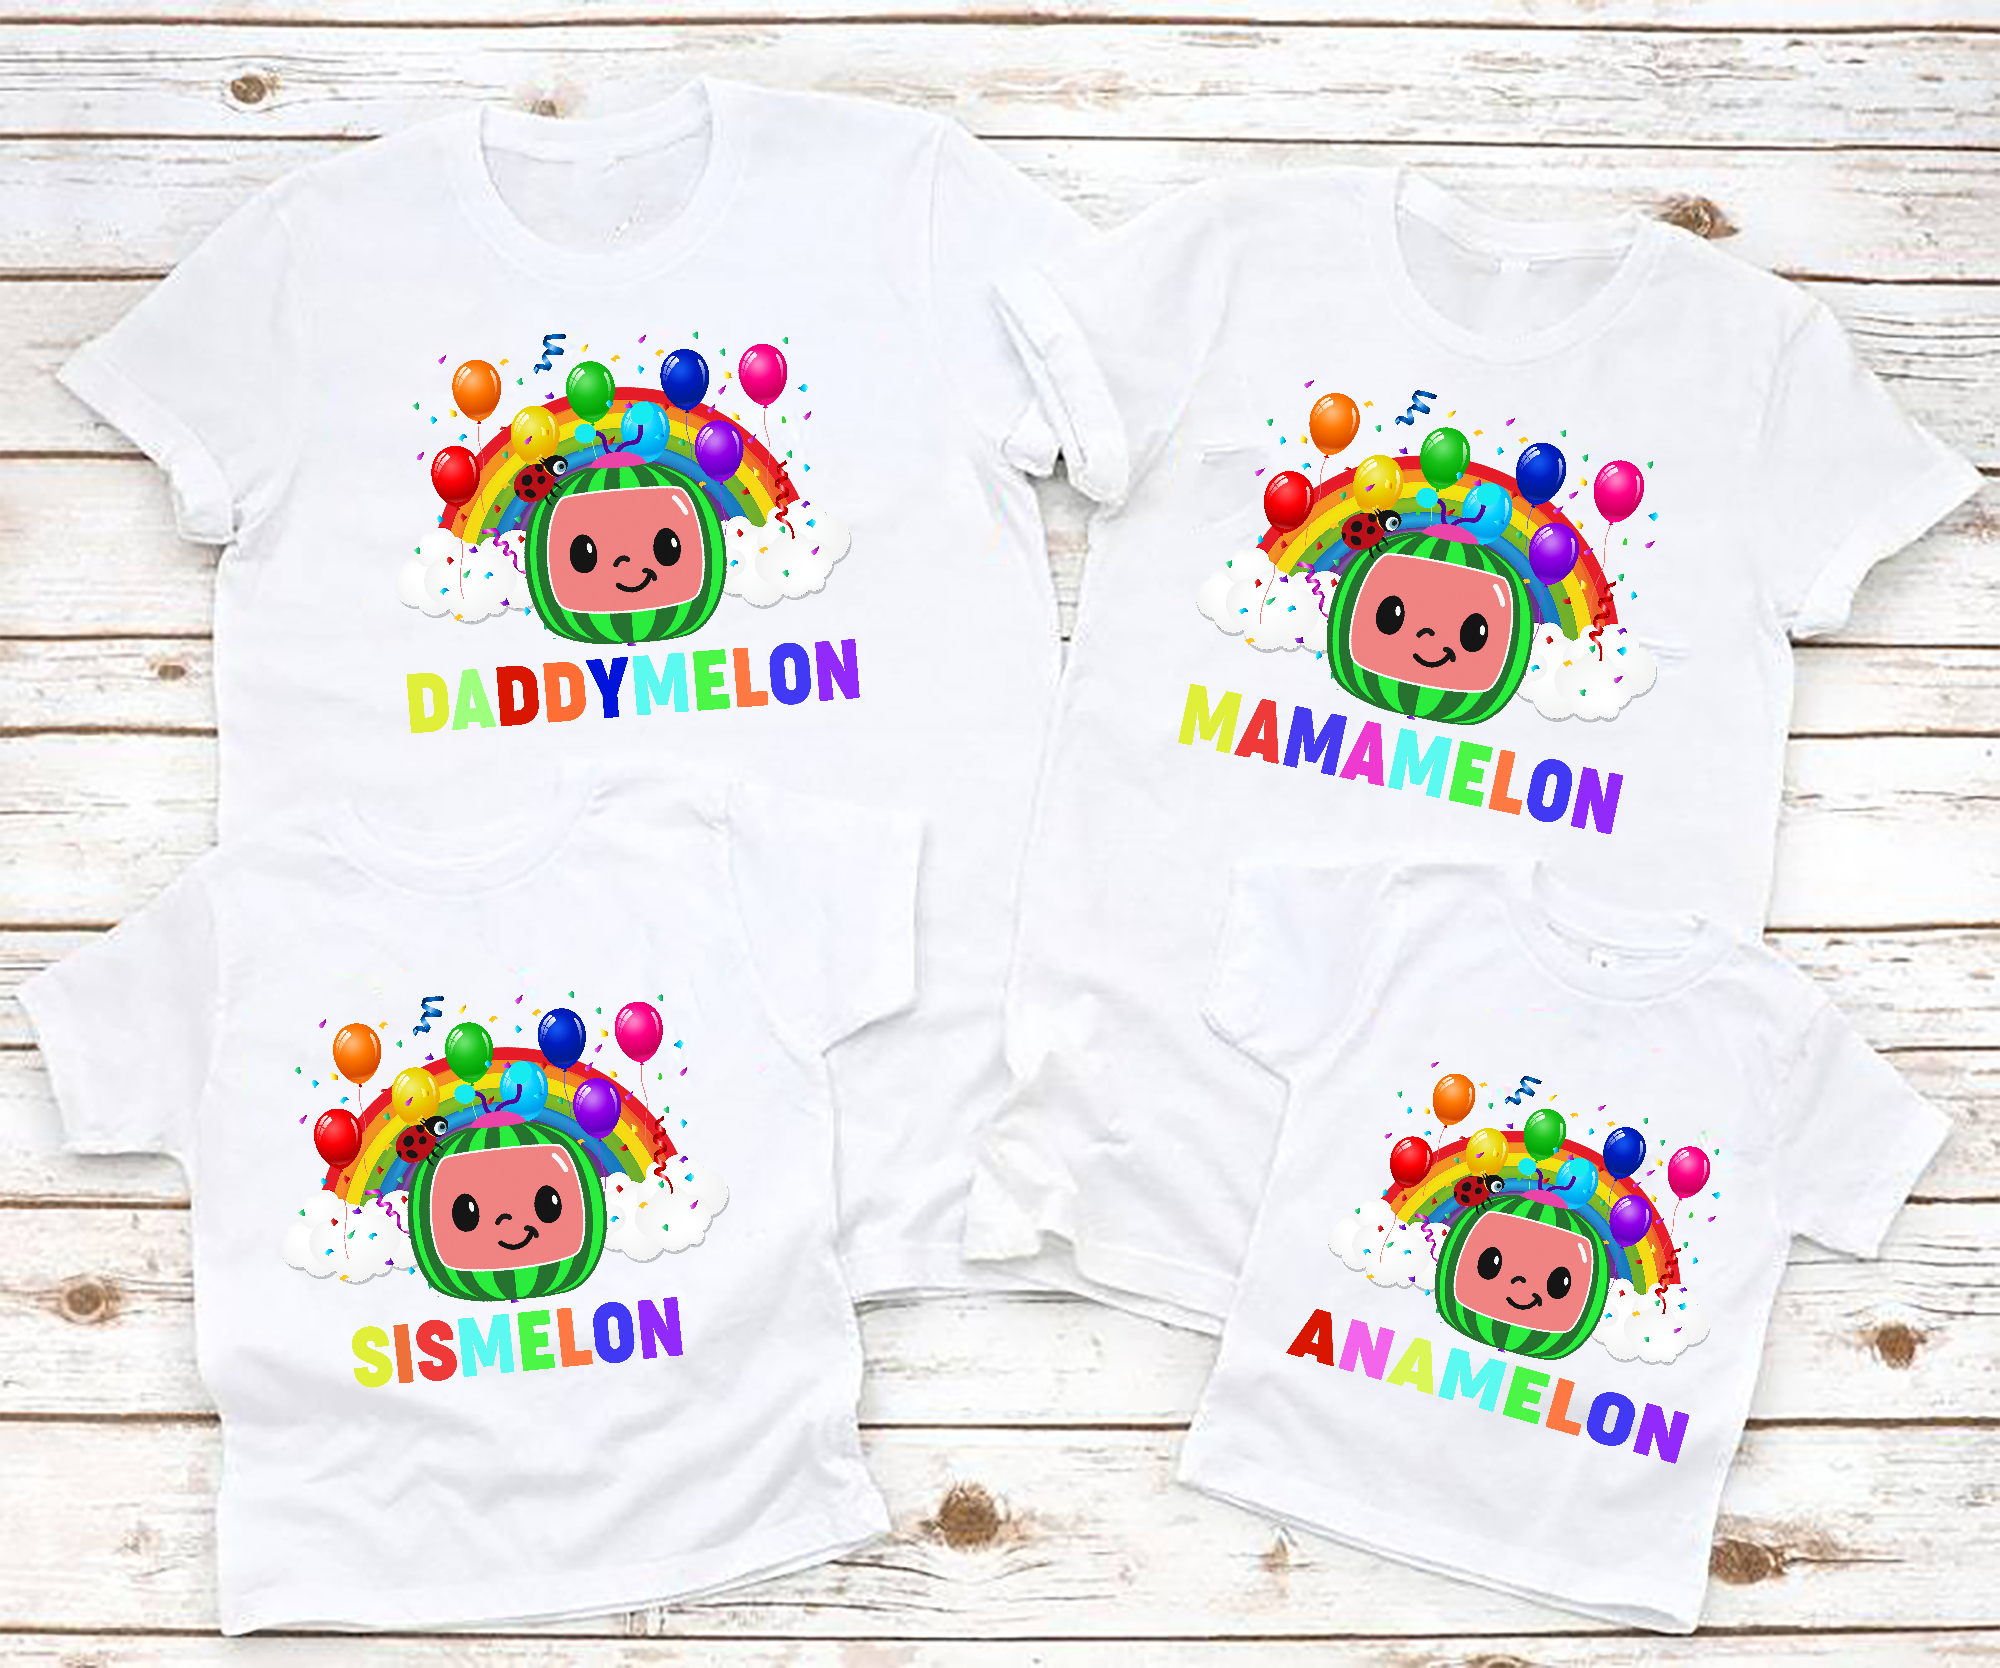 Cocomelon Party Shirt, Rainbow Melon Shirt, Matching T-Shirts For Birthdays, Birthday Family Matching Shirt